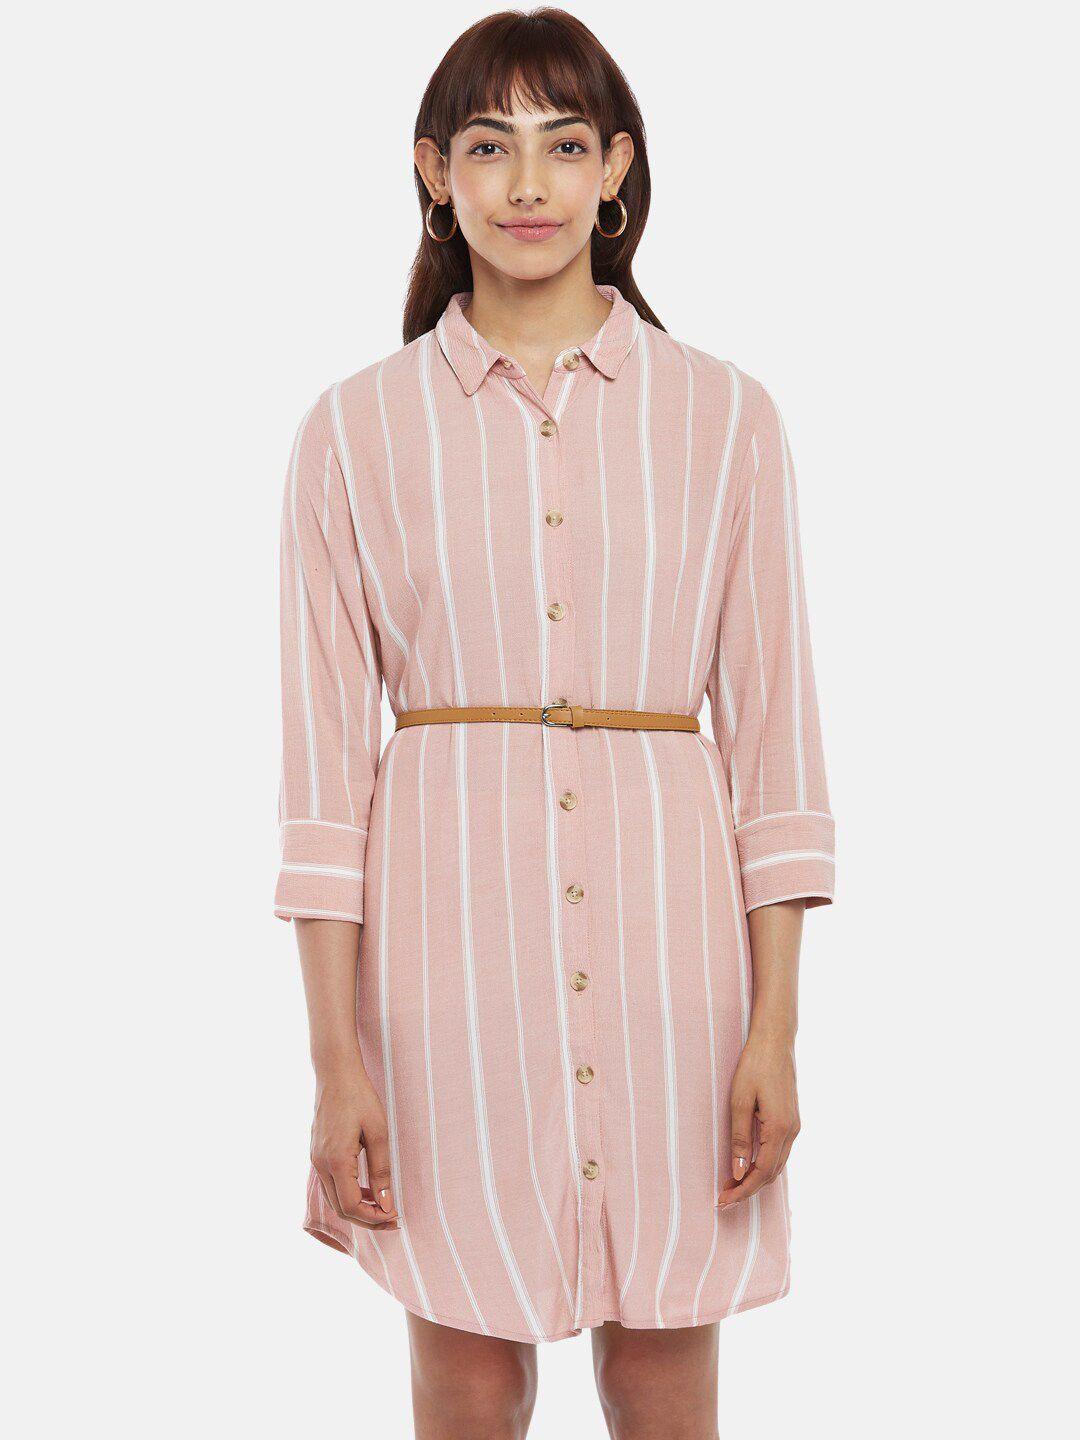 honey by pantaloons pink striped shirt dress